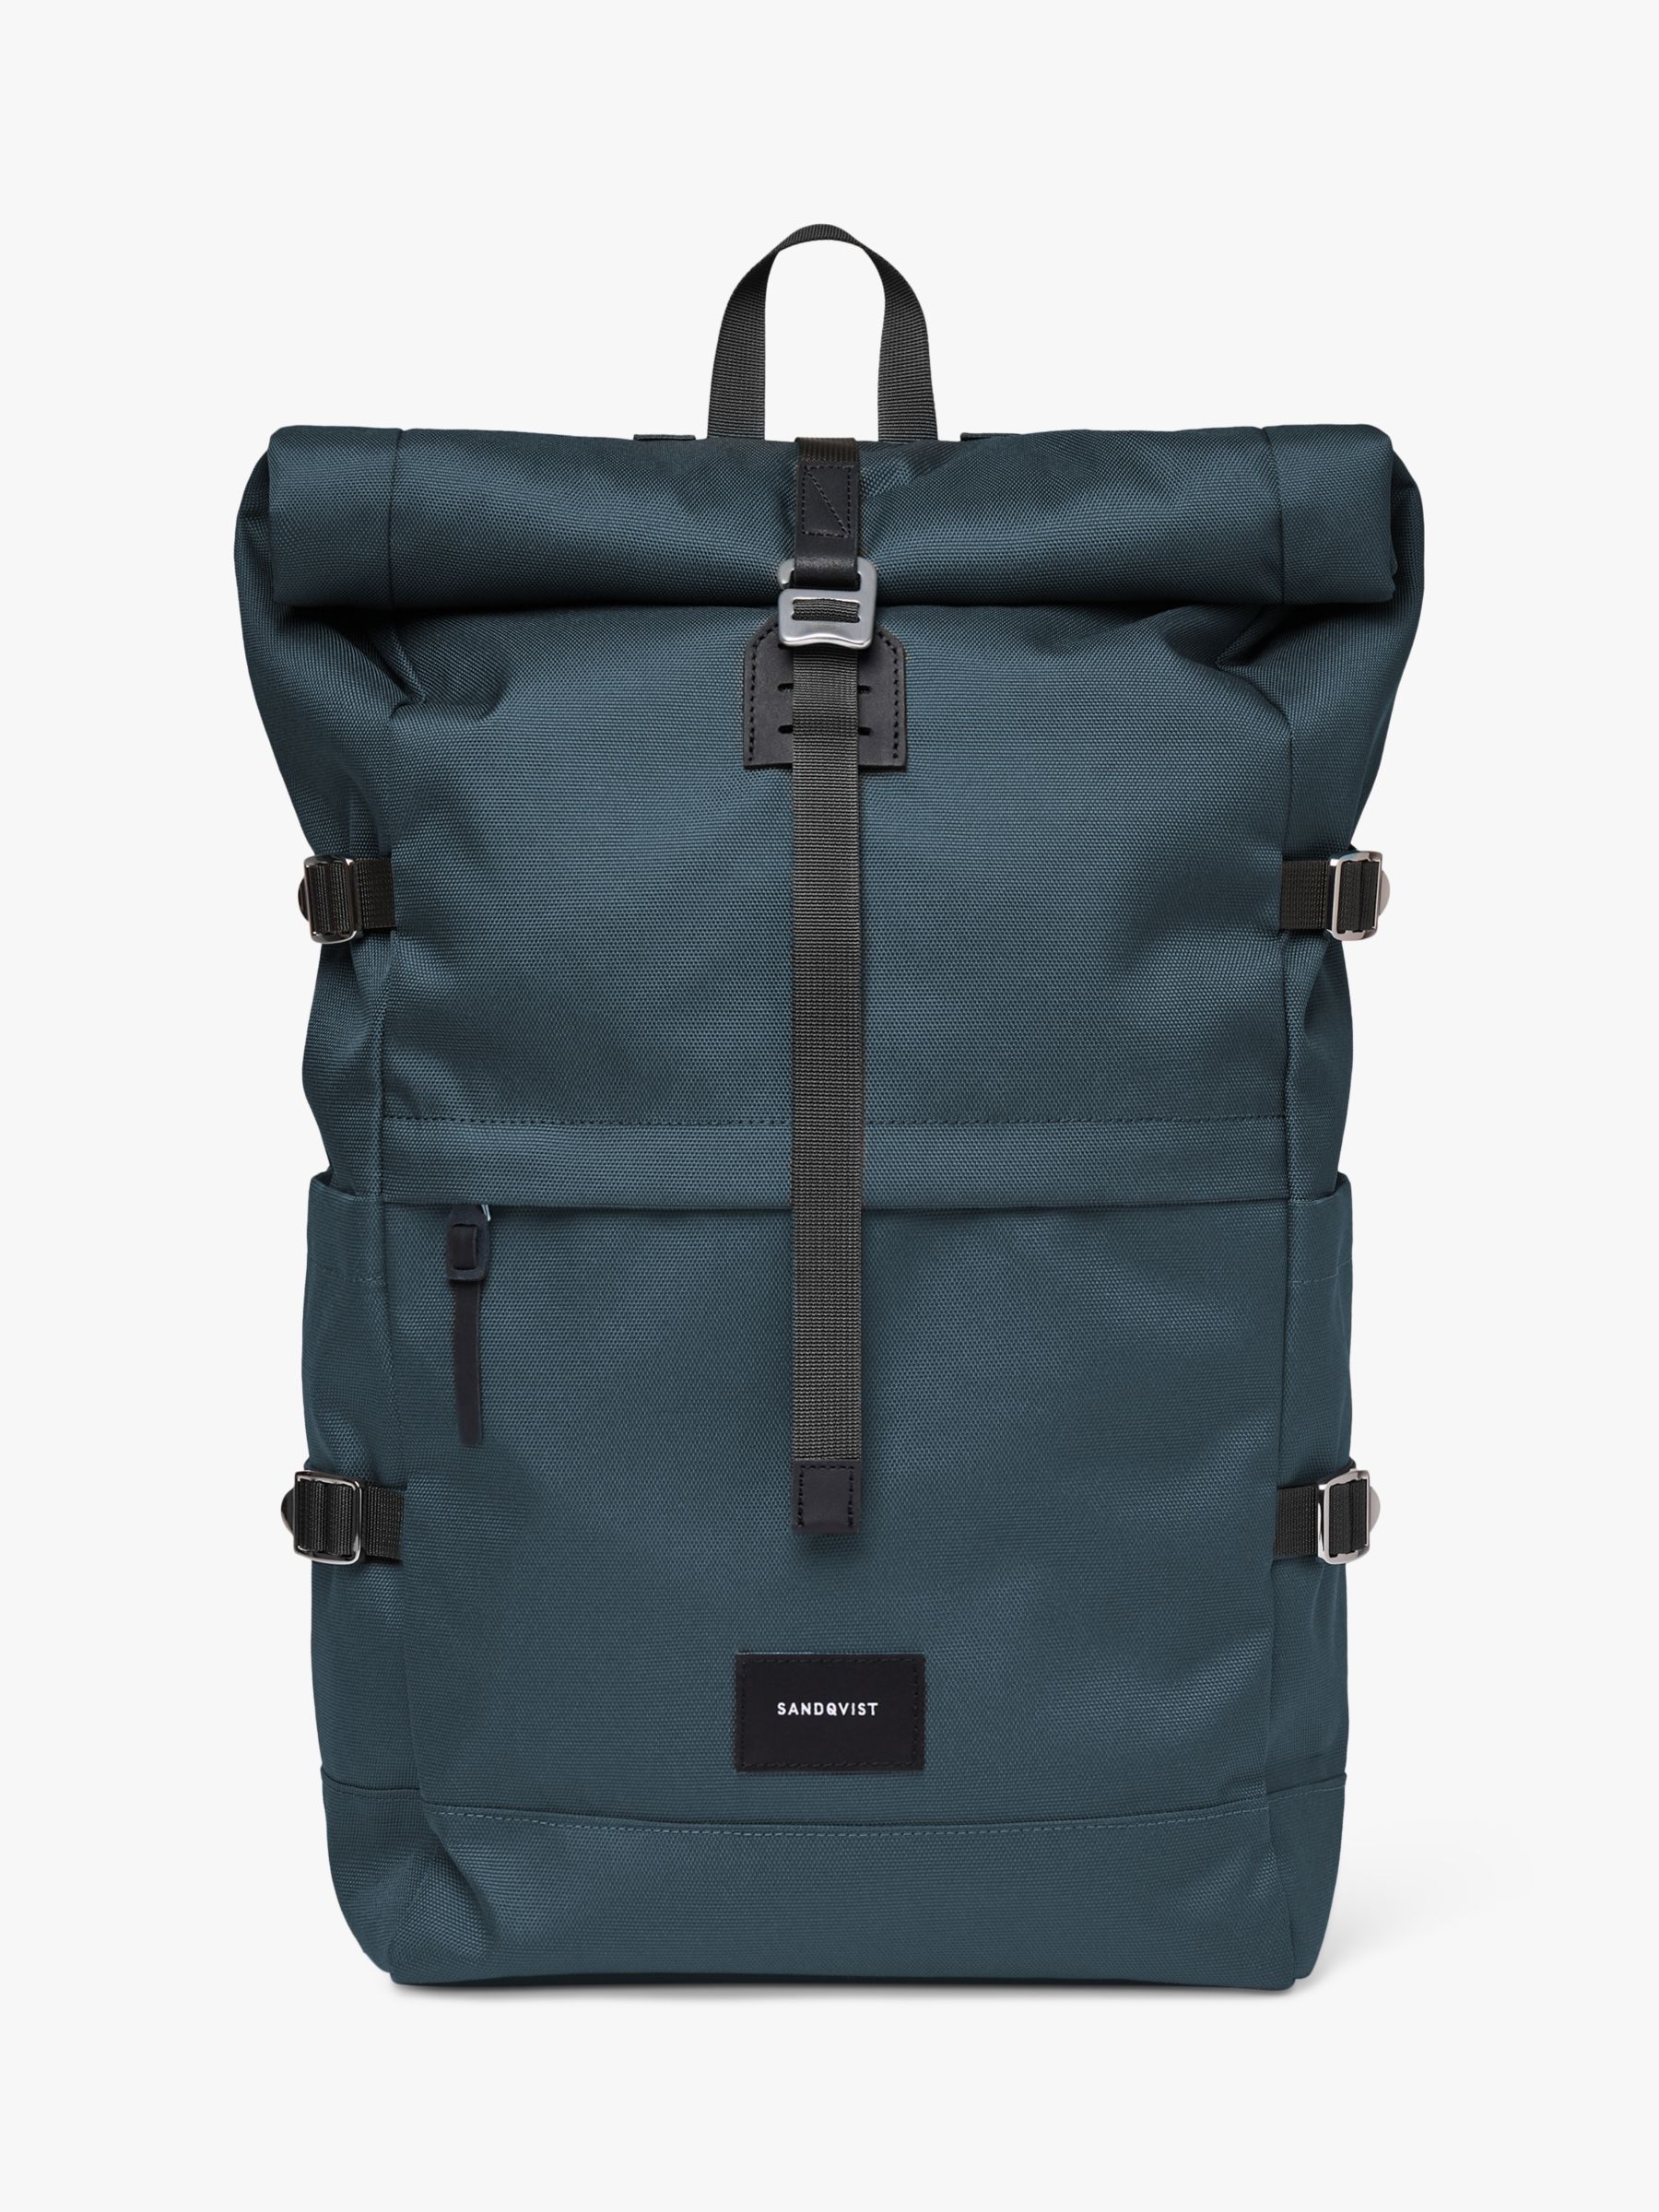 Sandqvist Bernt Roll-Top Backpack, 25L, Steel Blue at John Lewis & Partners